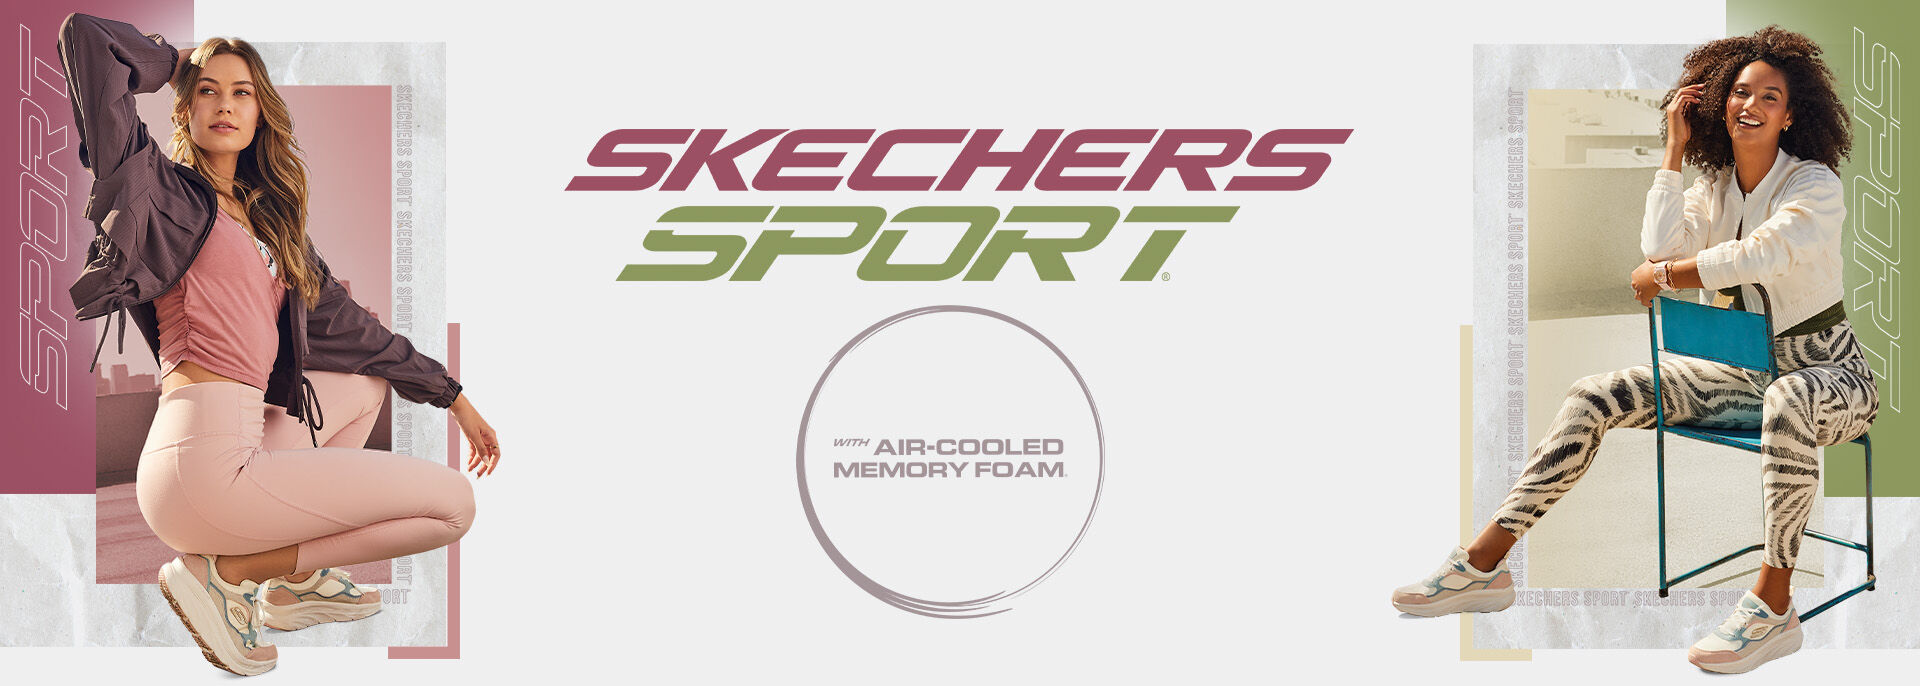 Skechers_Mujer_D.jpg